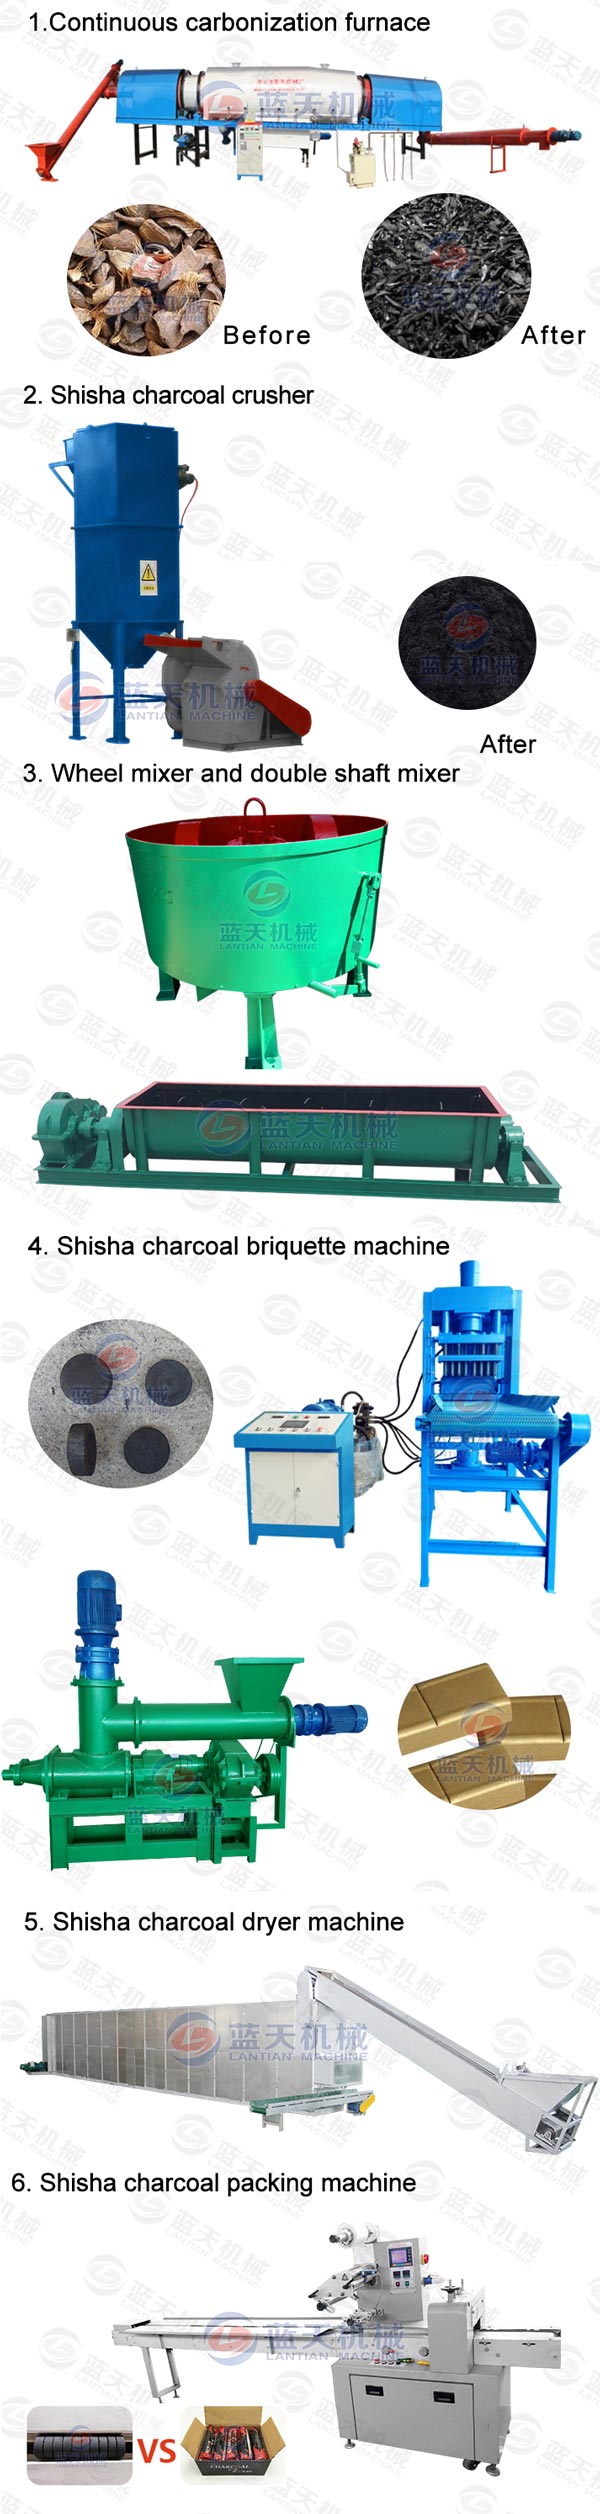 Production line of shisha charcoal packing machine